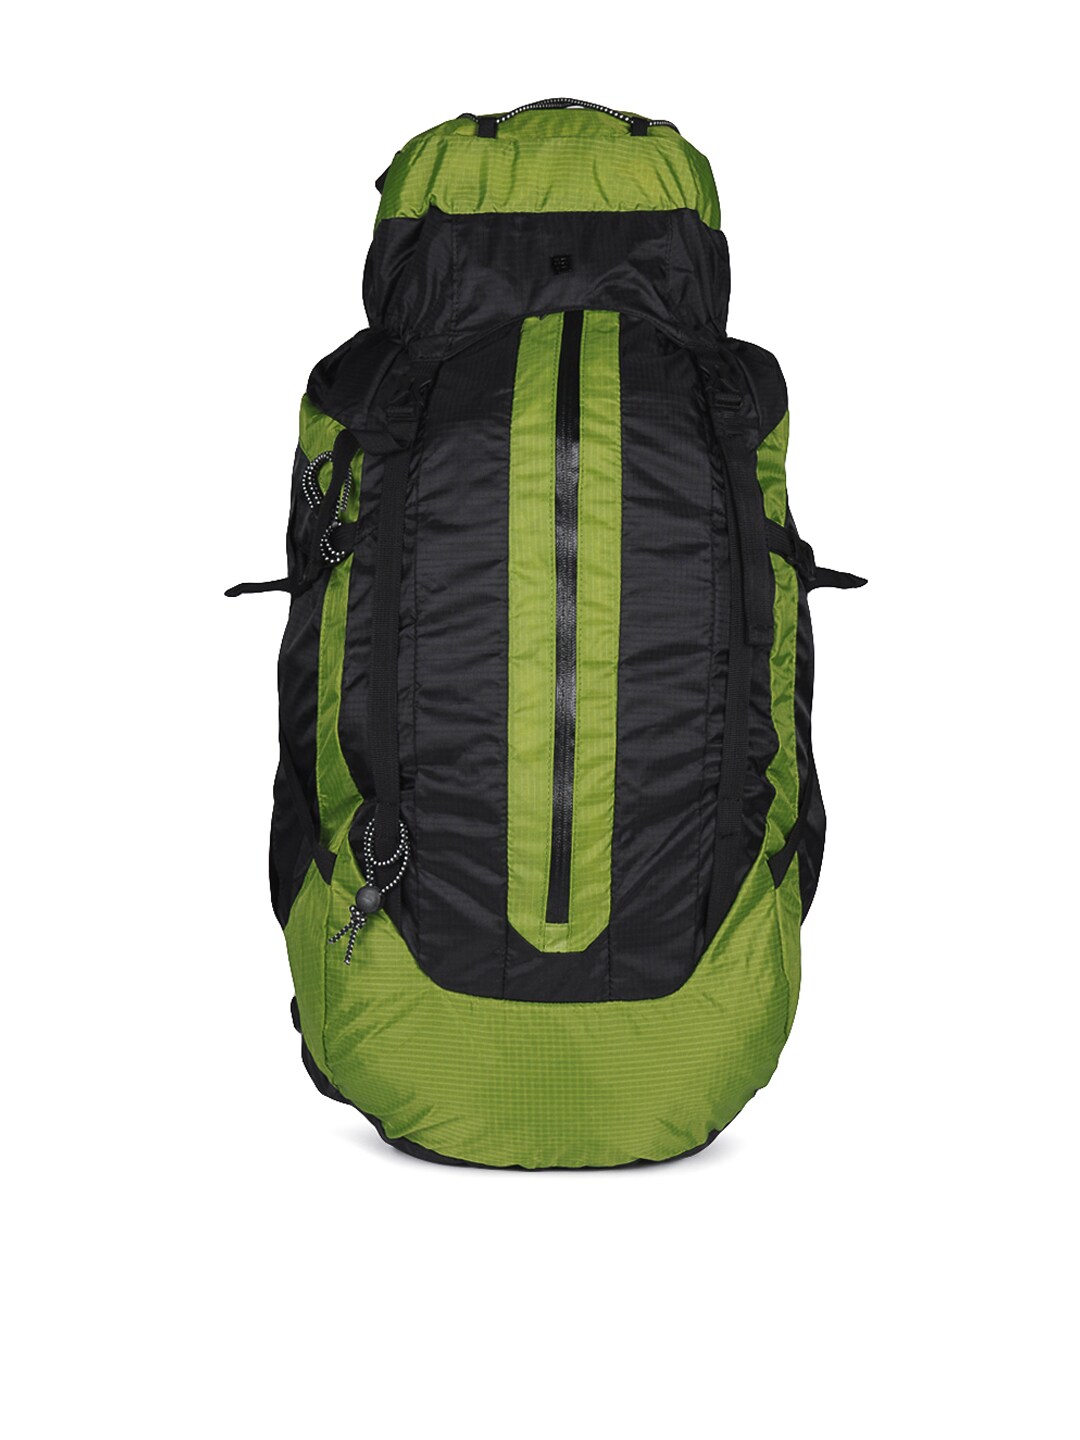 Peter England Unisex Black & Green Hiking Backpack